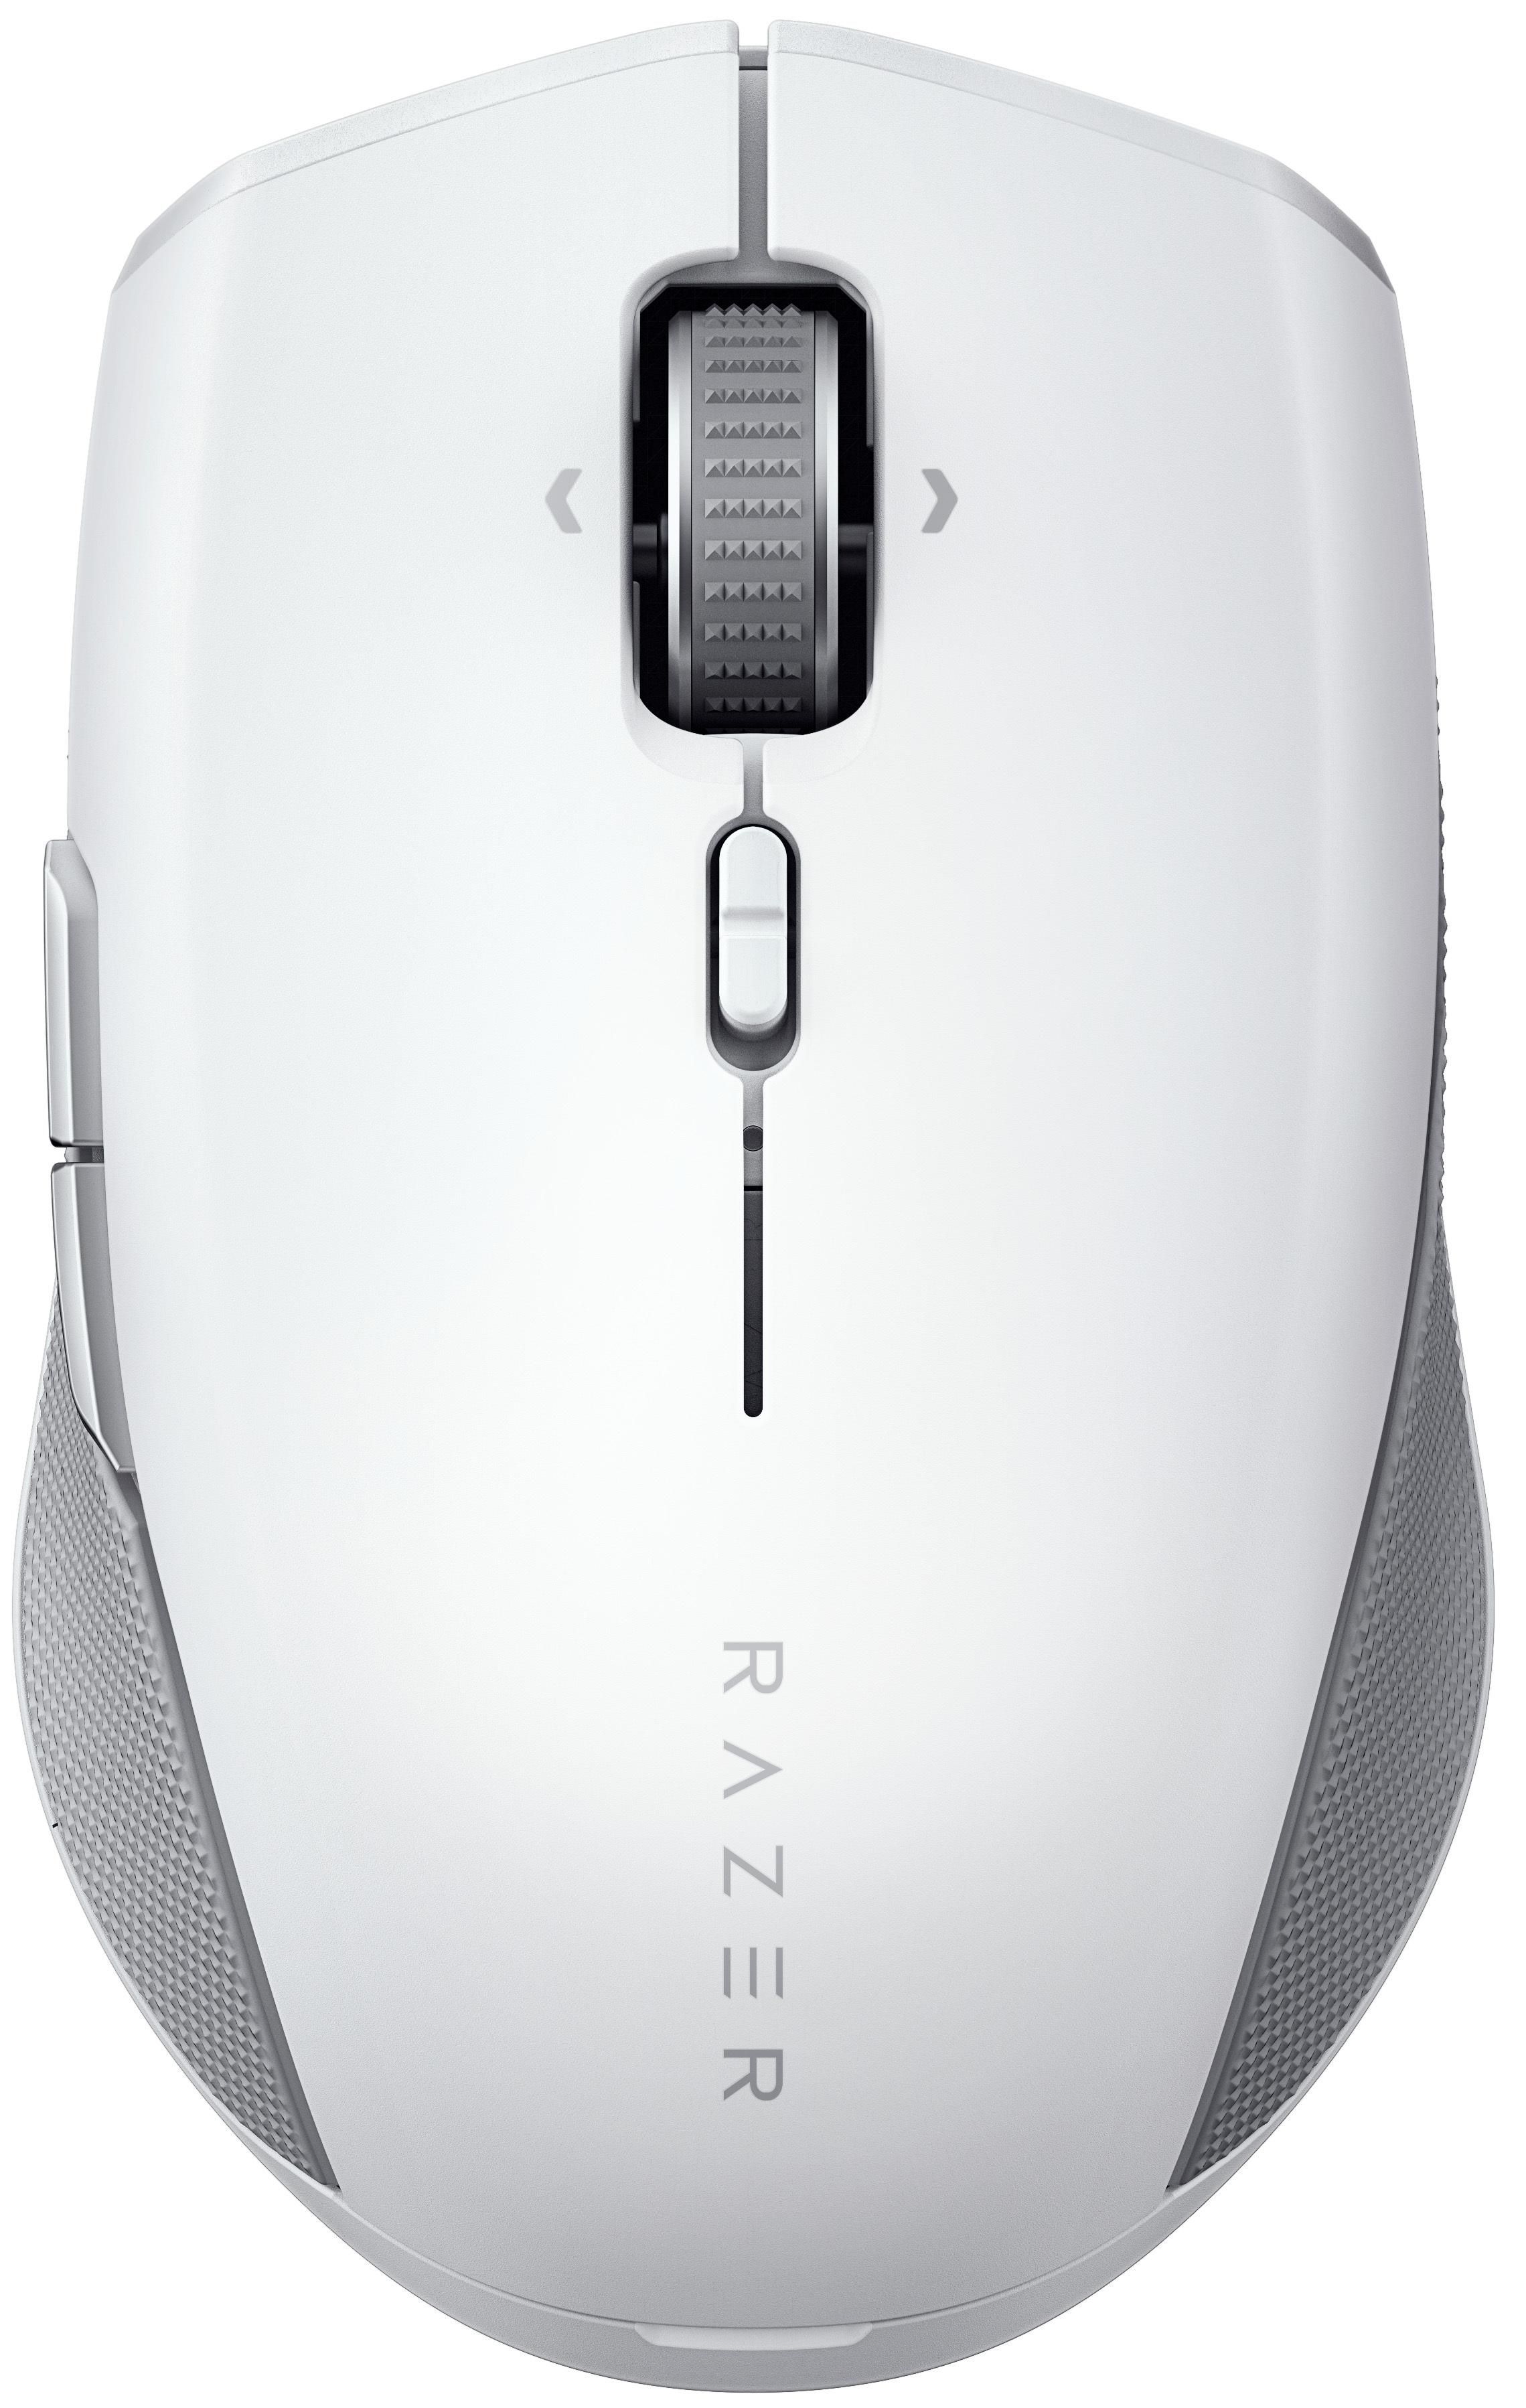 Mini click. Razer PROCLICK Mini. Razer Pro click Mouse. Мышка Razer Pro click. Razer Pro click Mini.